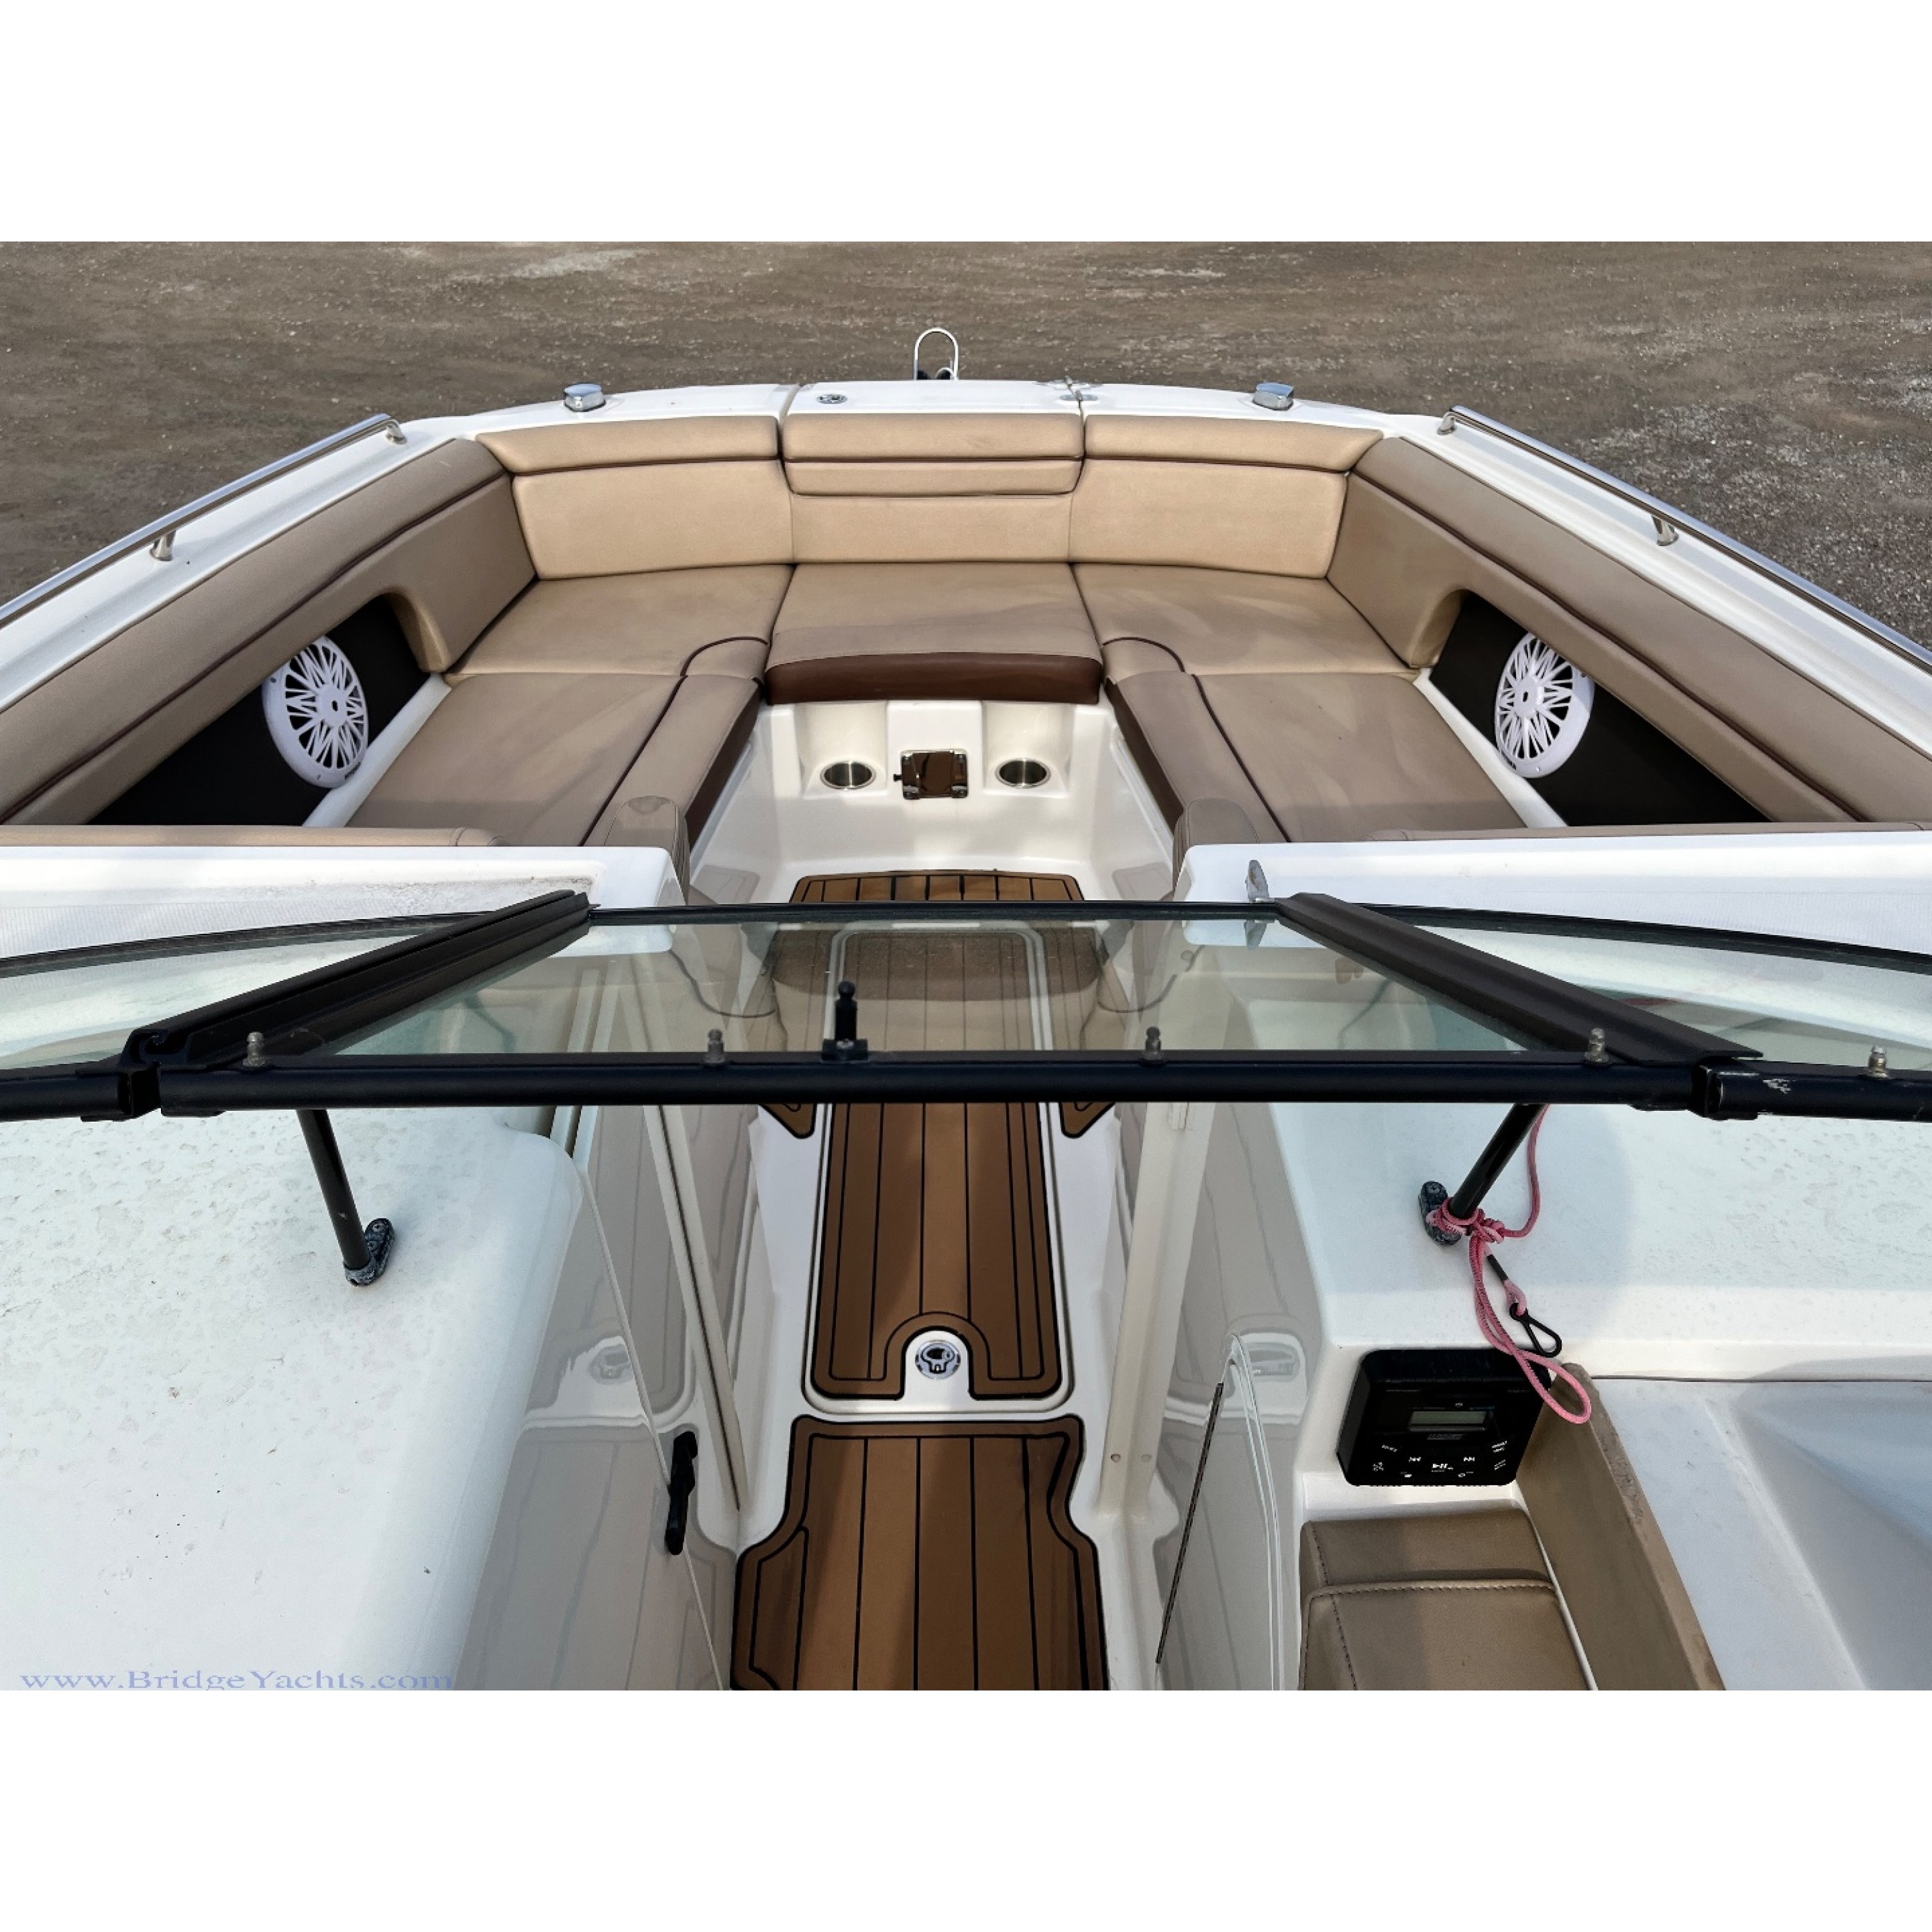 2017 29ft 2in Searay 290 SDX Deck Boat